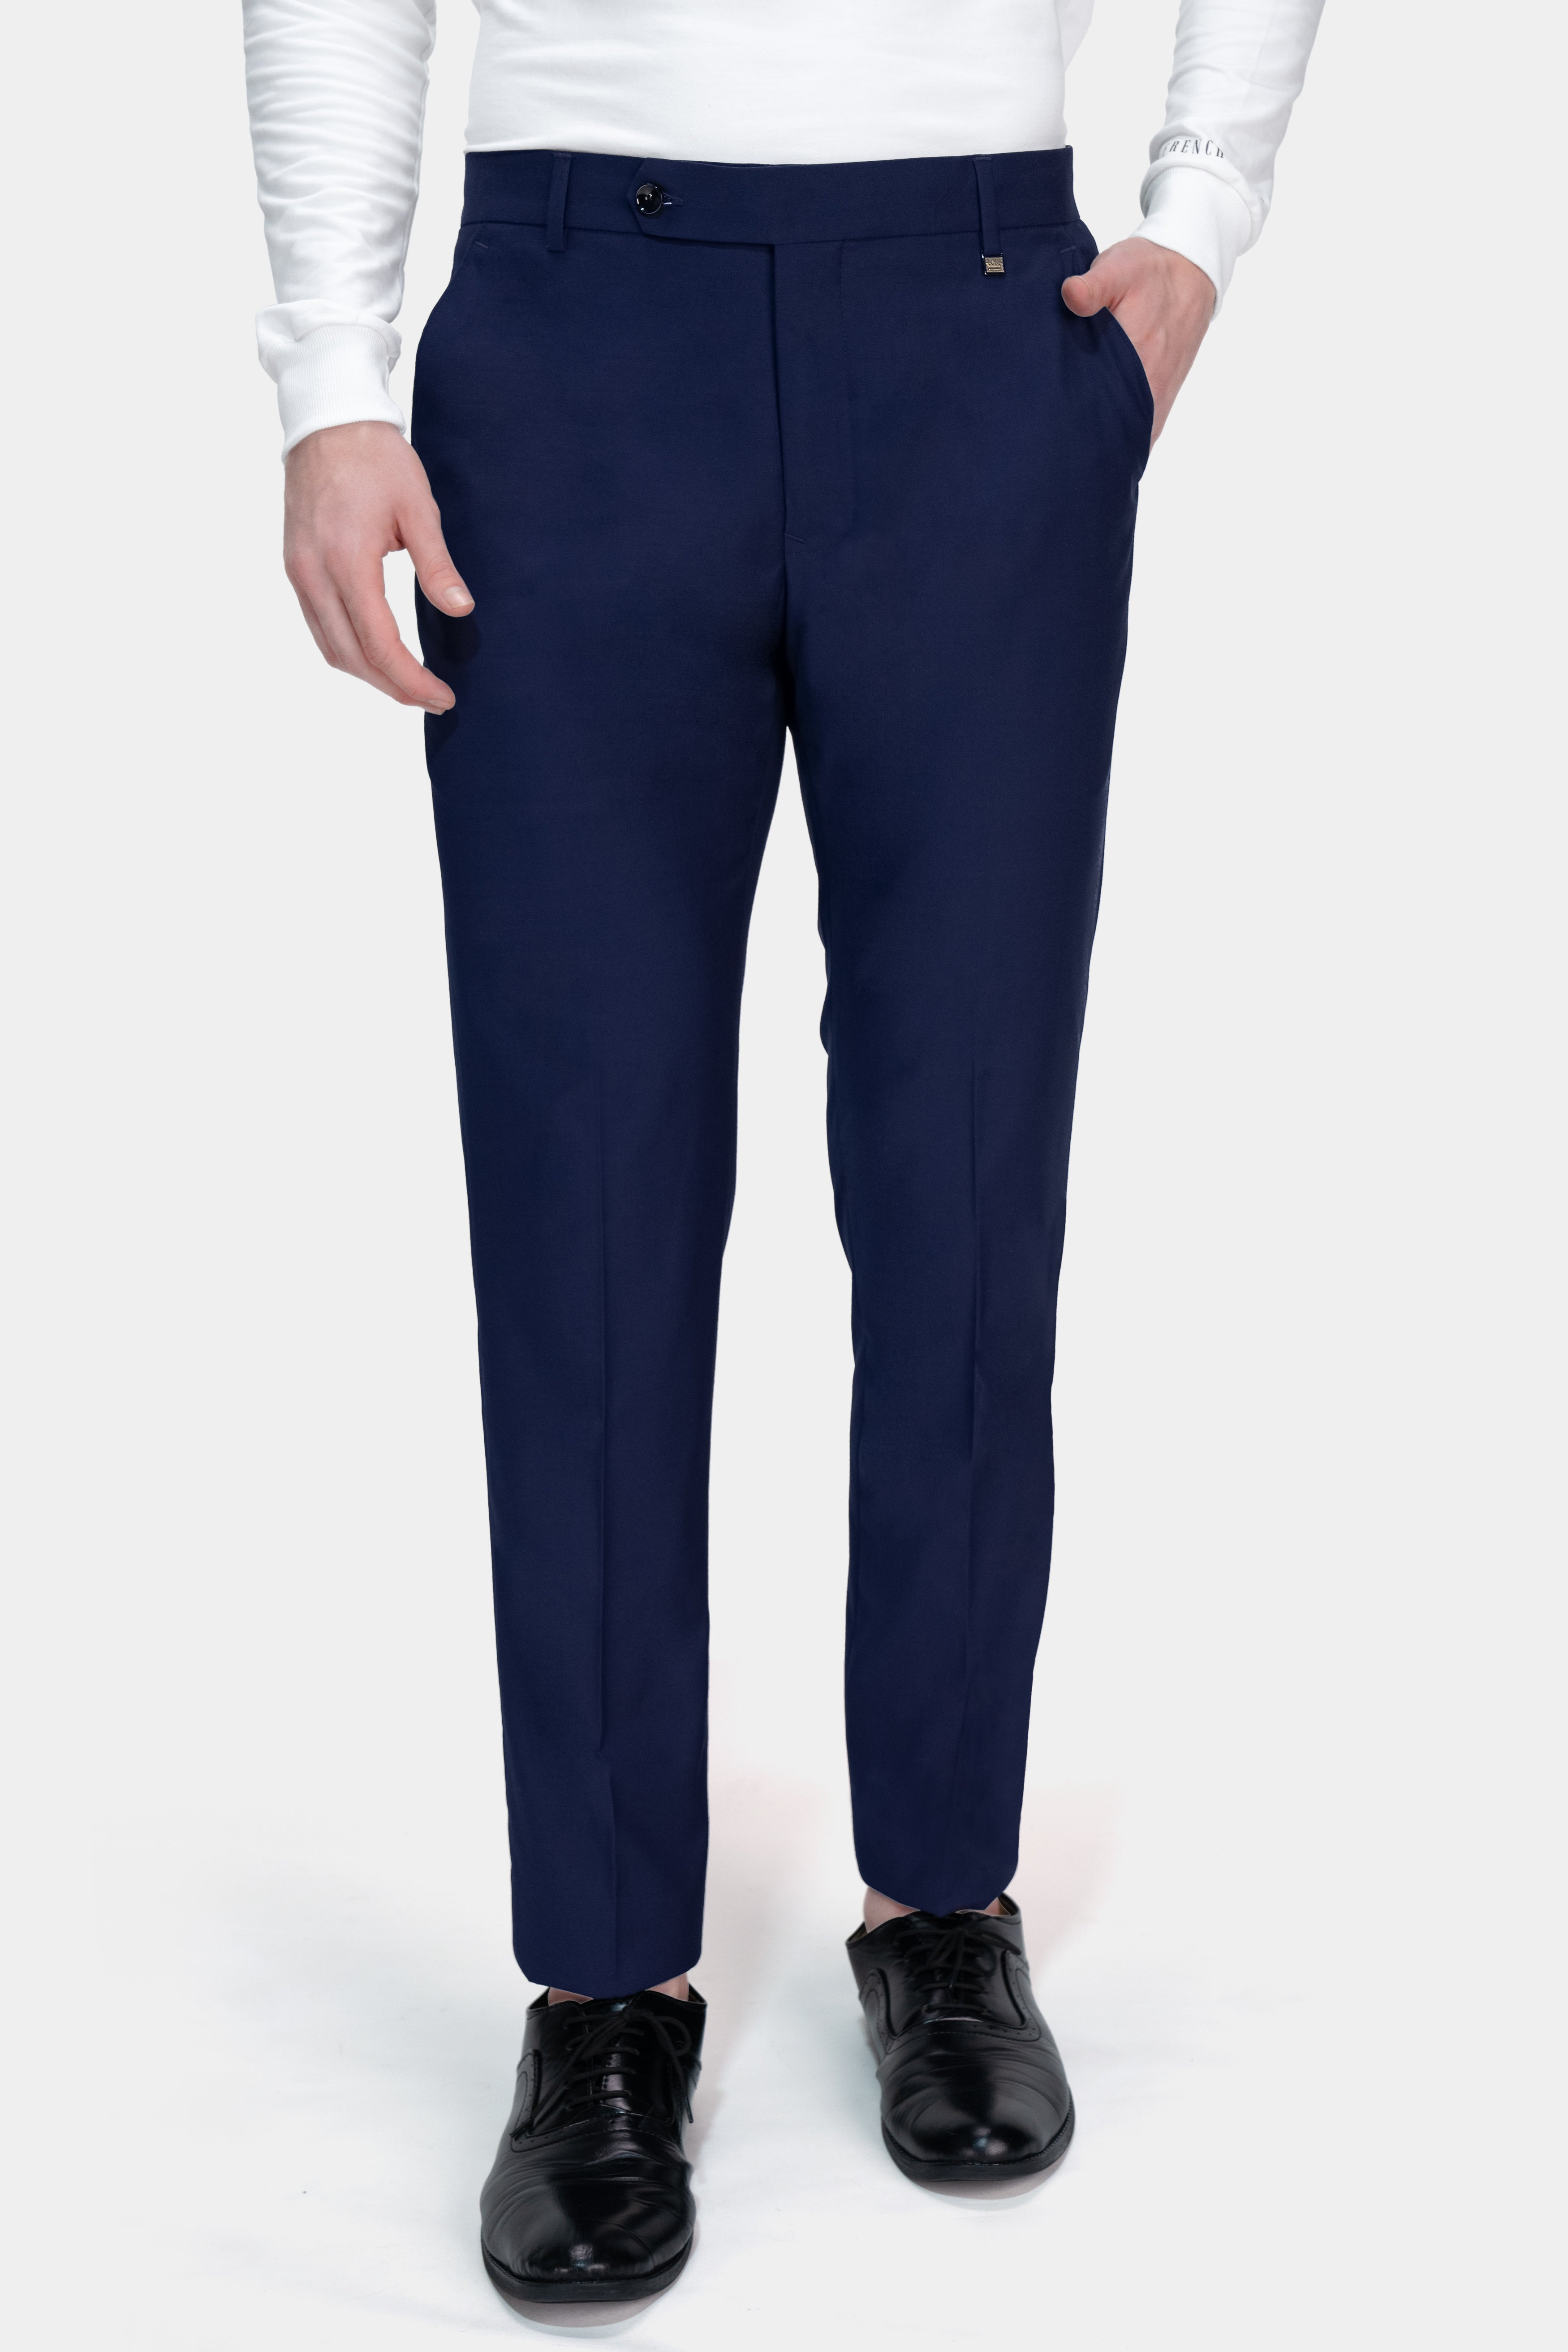 Buy CHARLIE CARLOS Men's Slim Fit Formal Trousers/Pants (Polyester Viscose  Blend,28) Men Grey at Amazon.in